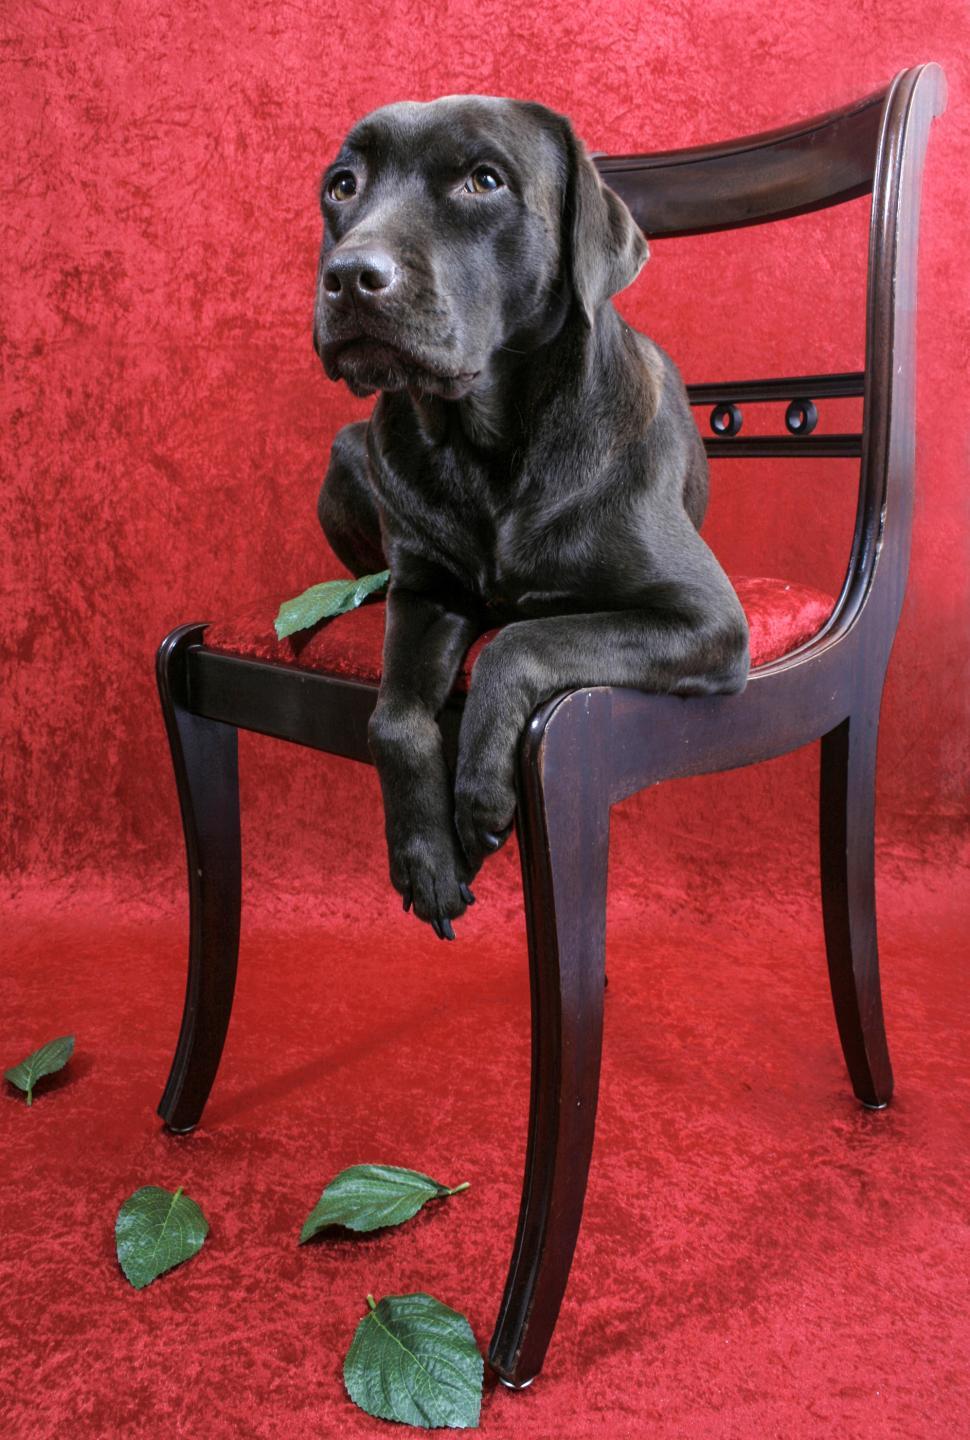 Free Image of Labrador dog on chair 